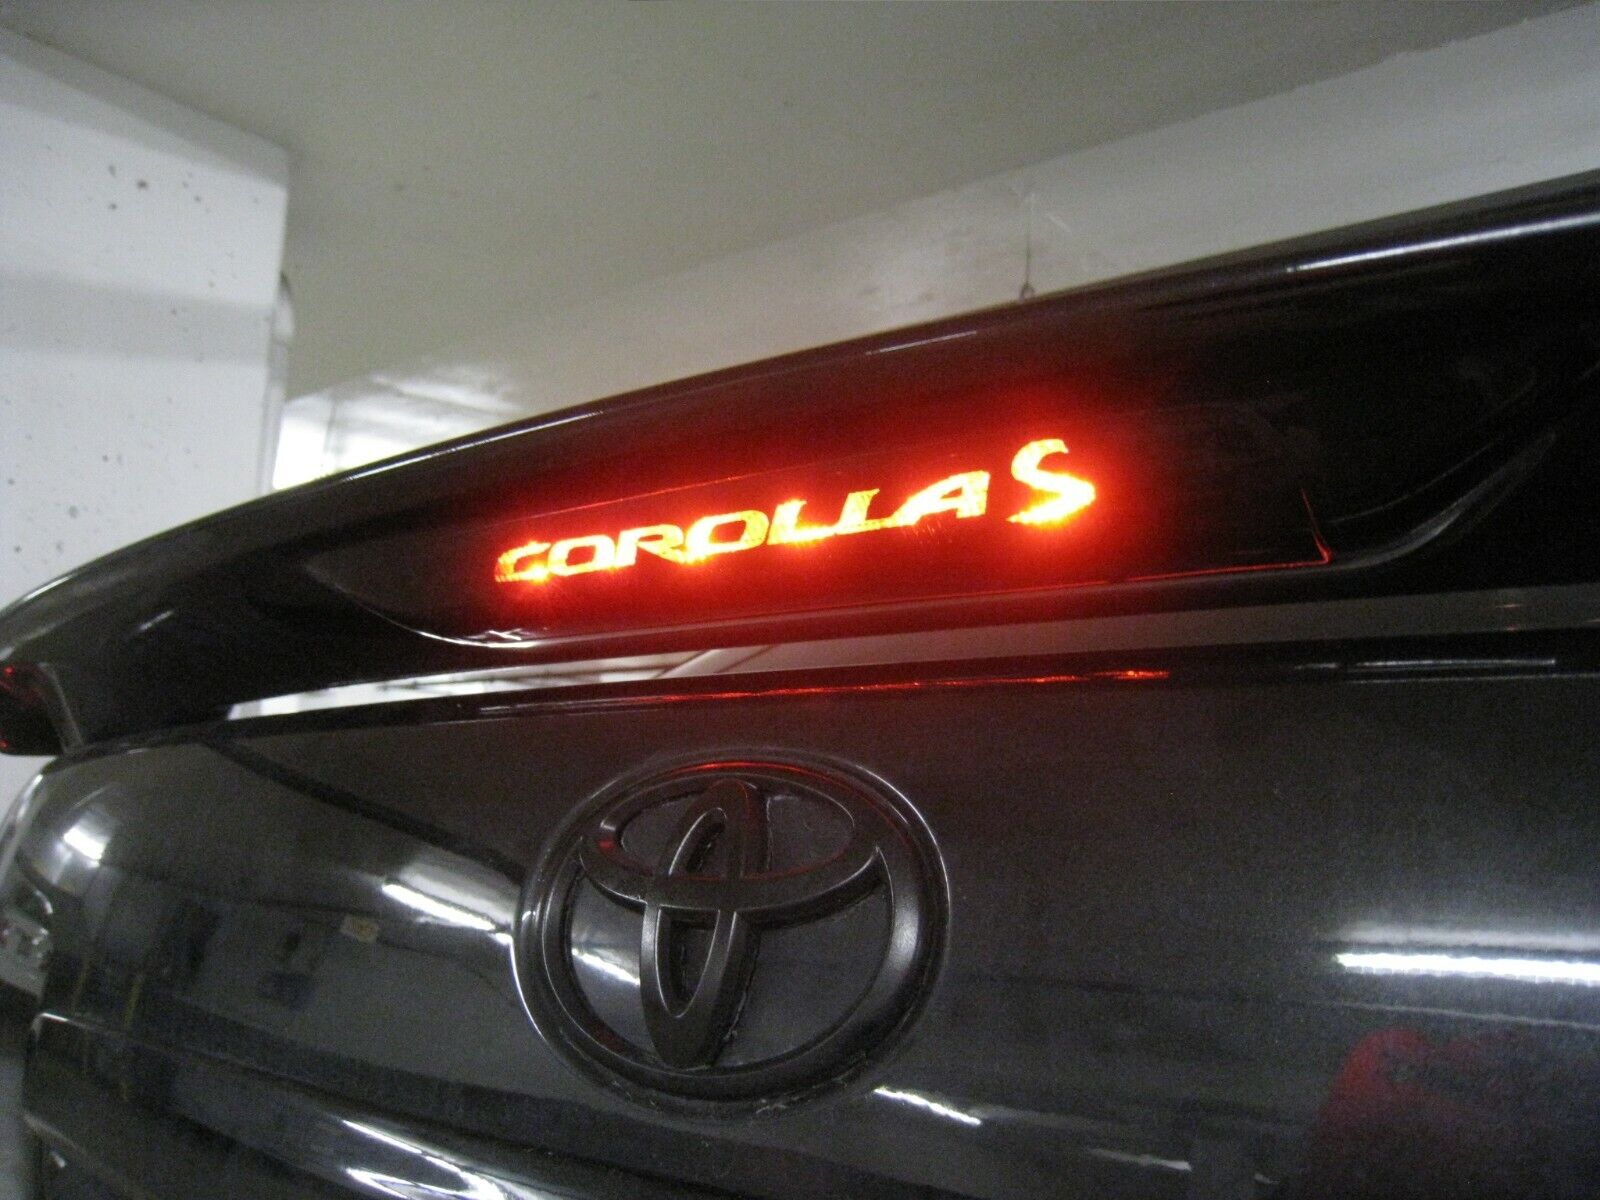 FITS Toyota Corolla S 3rd Brake Light Decal - 09 10 11 12 13